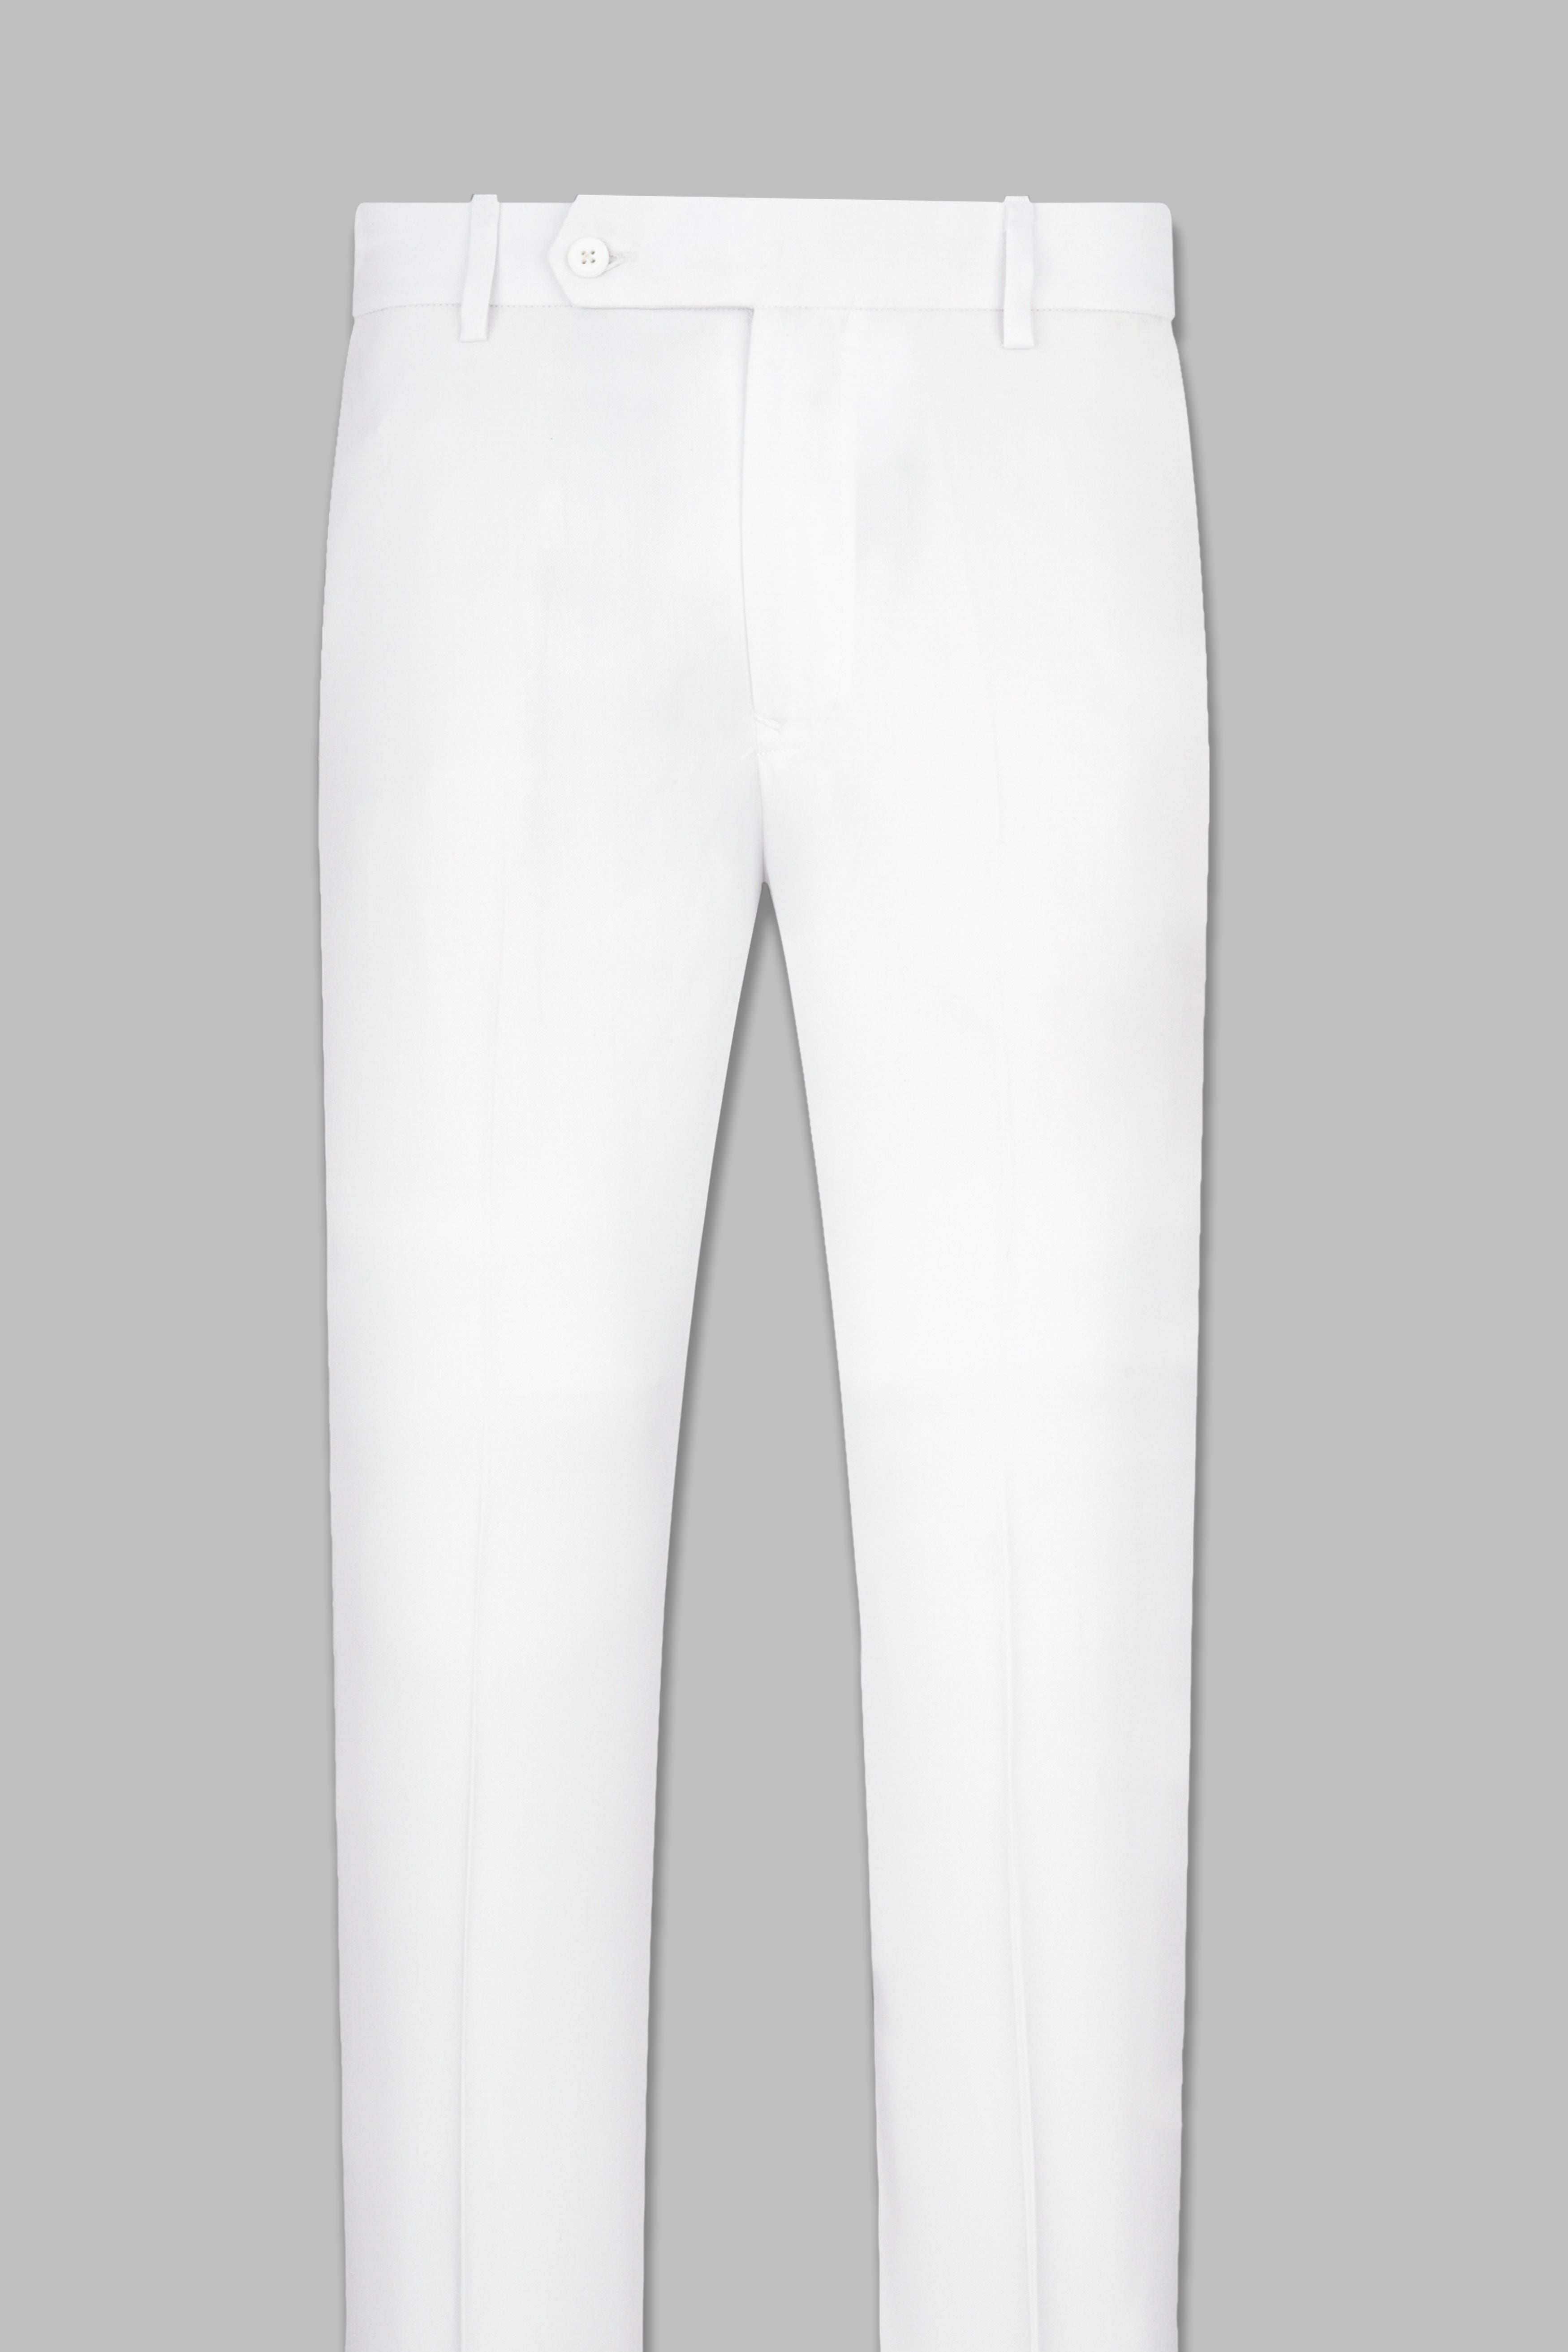 Bright White Wool Rich Designer Suit ST2798-SBP-FB-D272-36,ST2798-SBP-FB-D272-38,ST2798-SBP-FB-D272-40,ST2798-SBP-FB-D272-42,ST2798-SBP-FB-D272-44,ST2798-SBP-FB-D272-46,ST2798-SBP-FB-D272-48,ST2798-SBP-FB-D272-50,ST2798-SBP-FB-D272-52,ST2798-SBP-FB-D272-54,ST2798-SBP-FB-D272-56,ST2798-SBP-FB-D272-58,ST2798-SBP-FB-D272-60